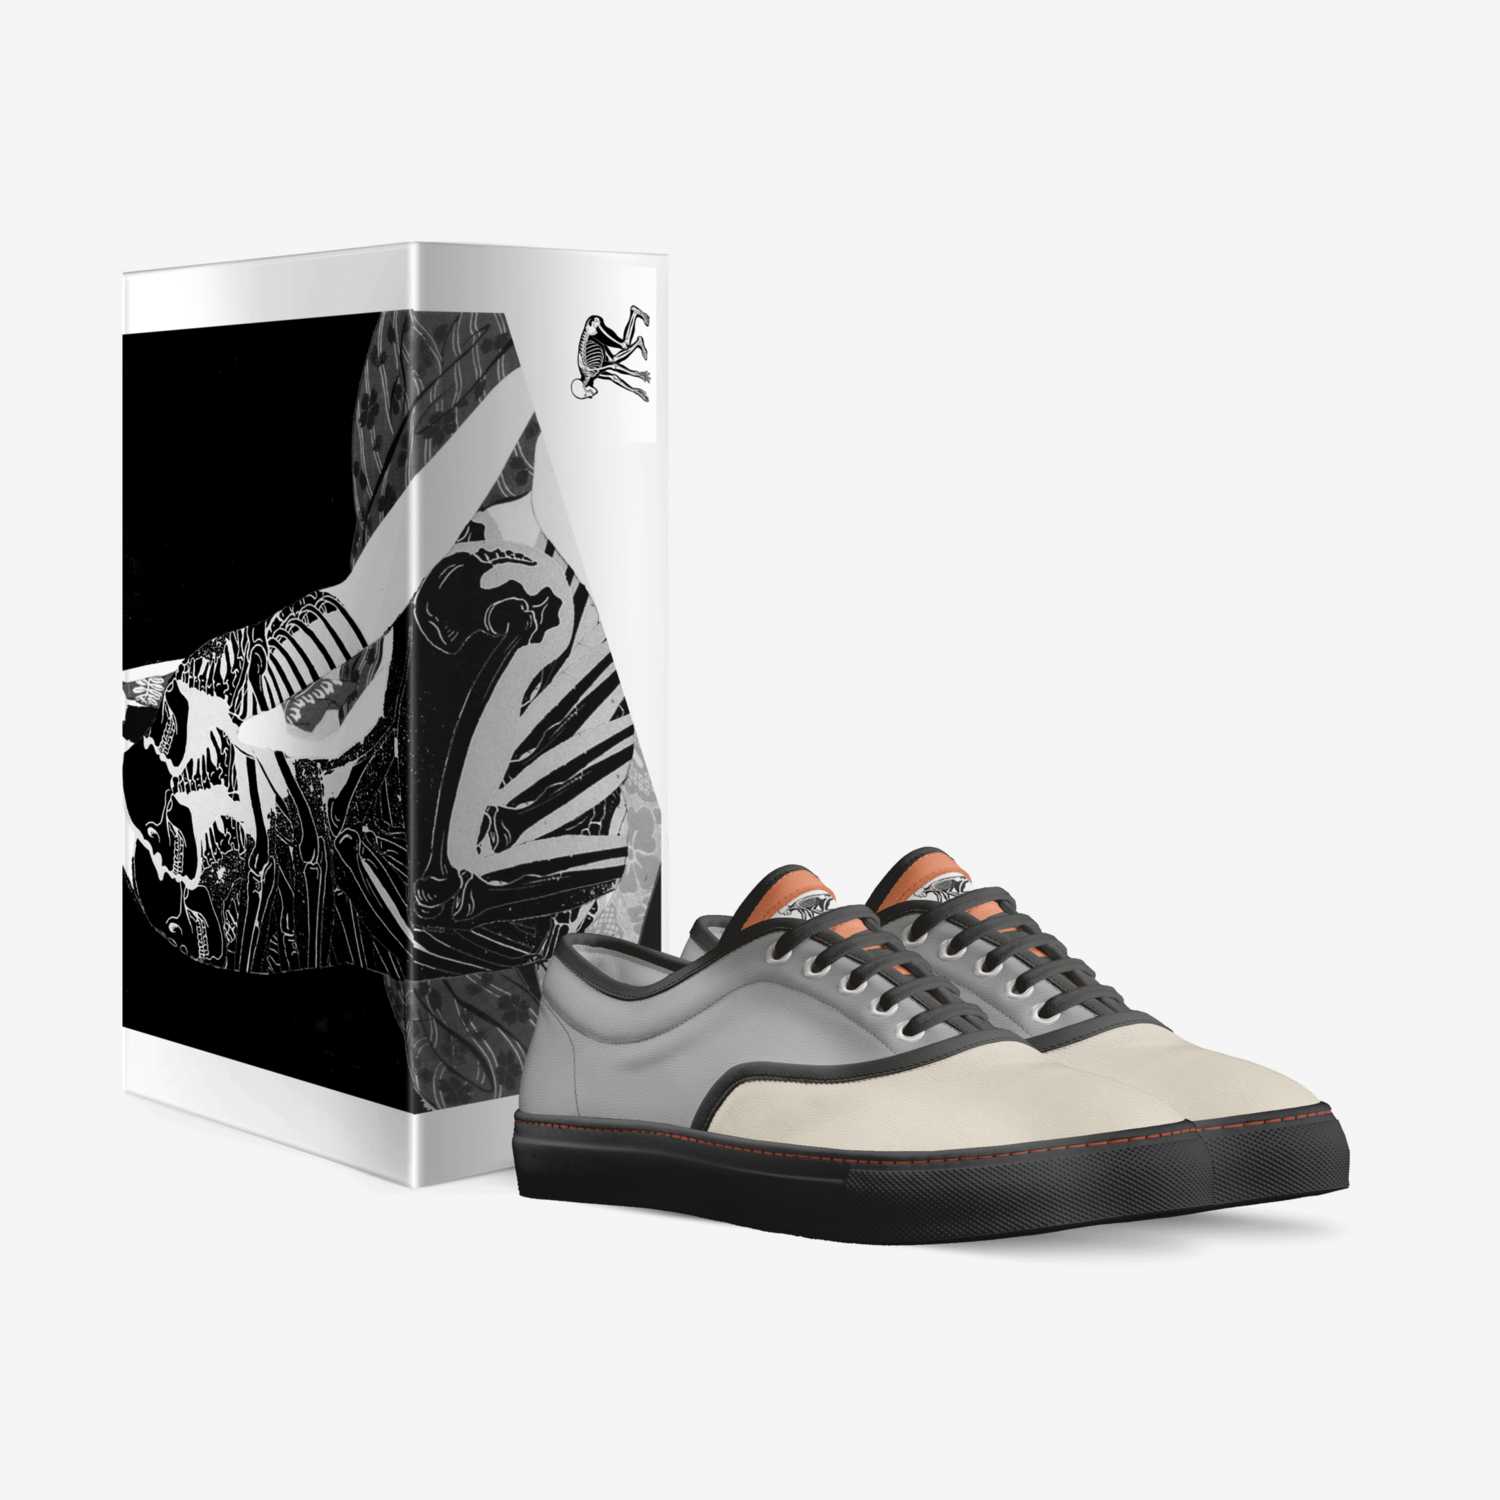 MOUNTEBANK custom made in Italy shoes by Landon Pallian | Box view